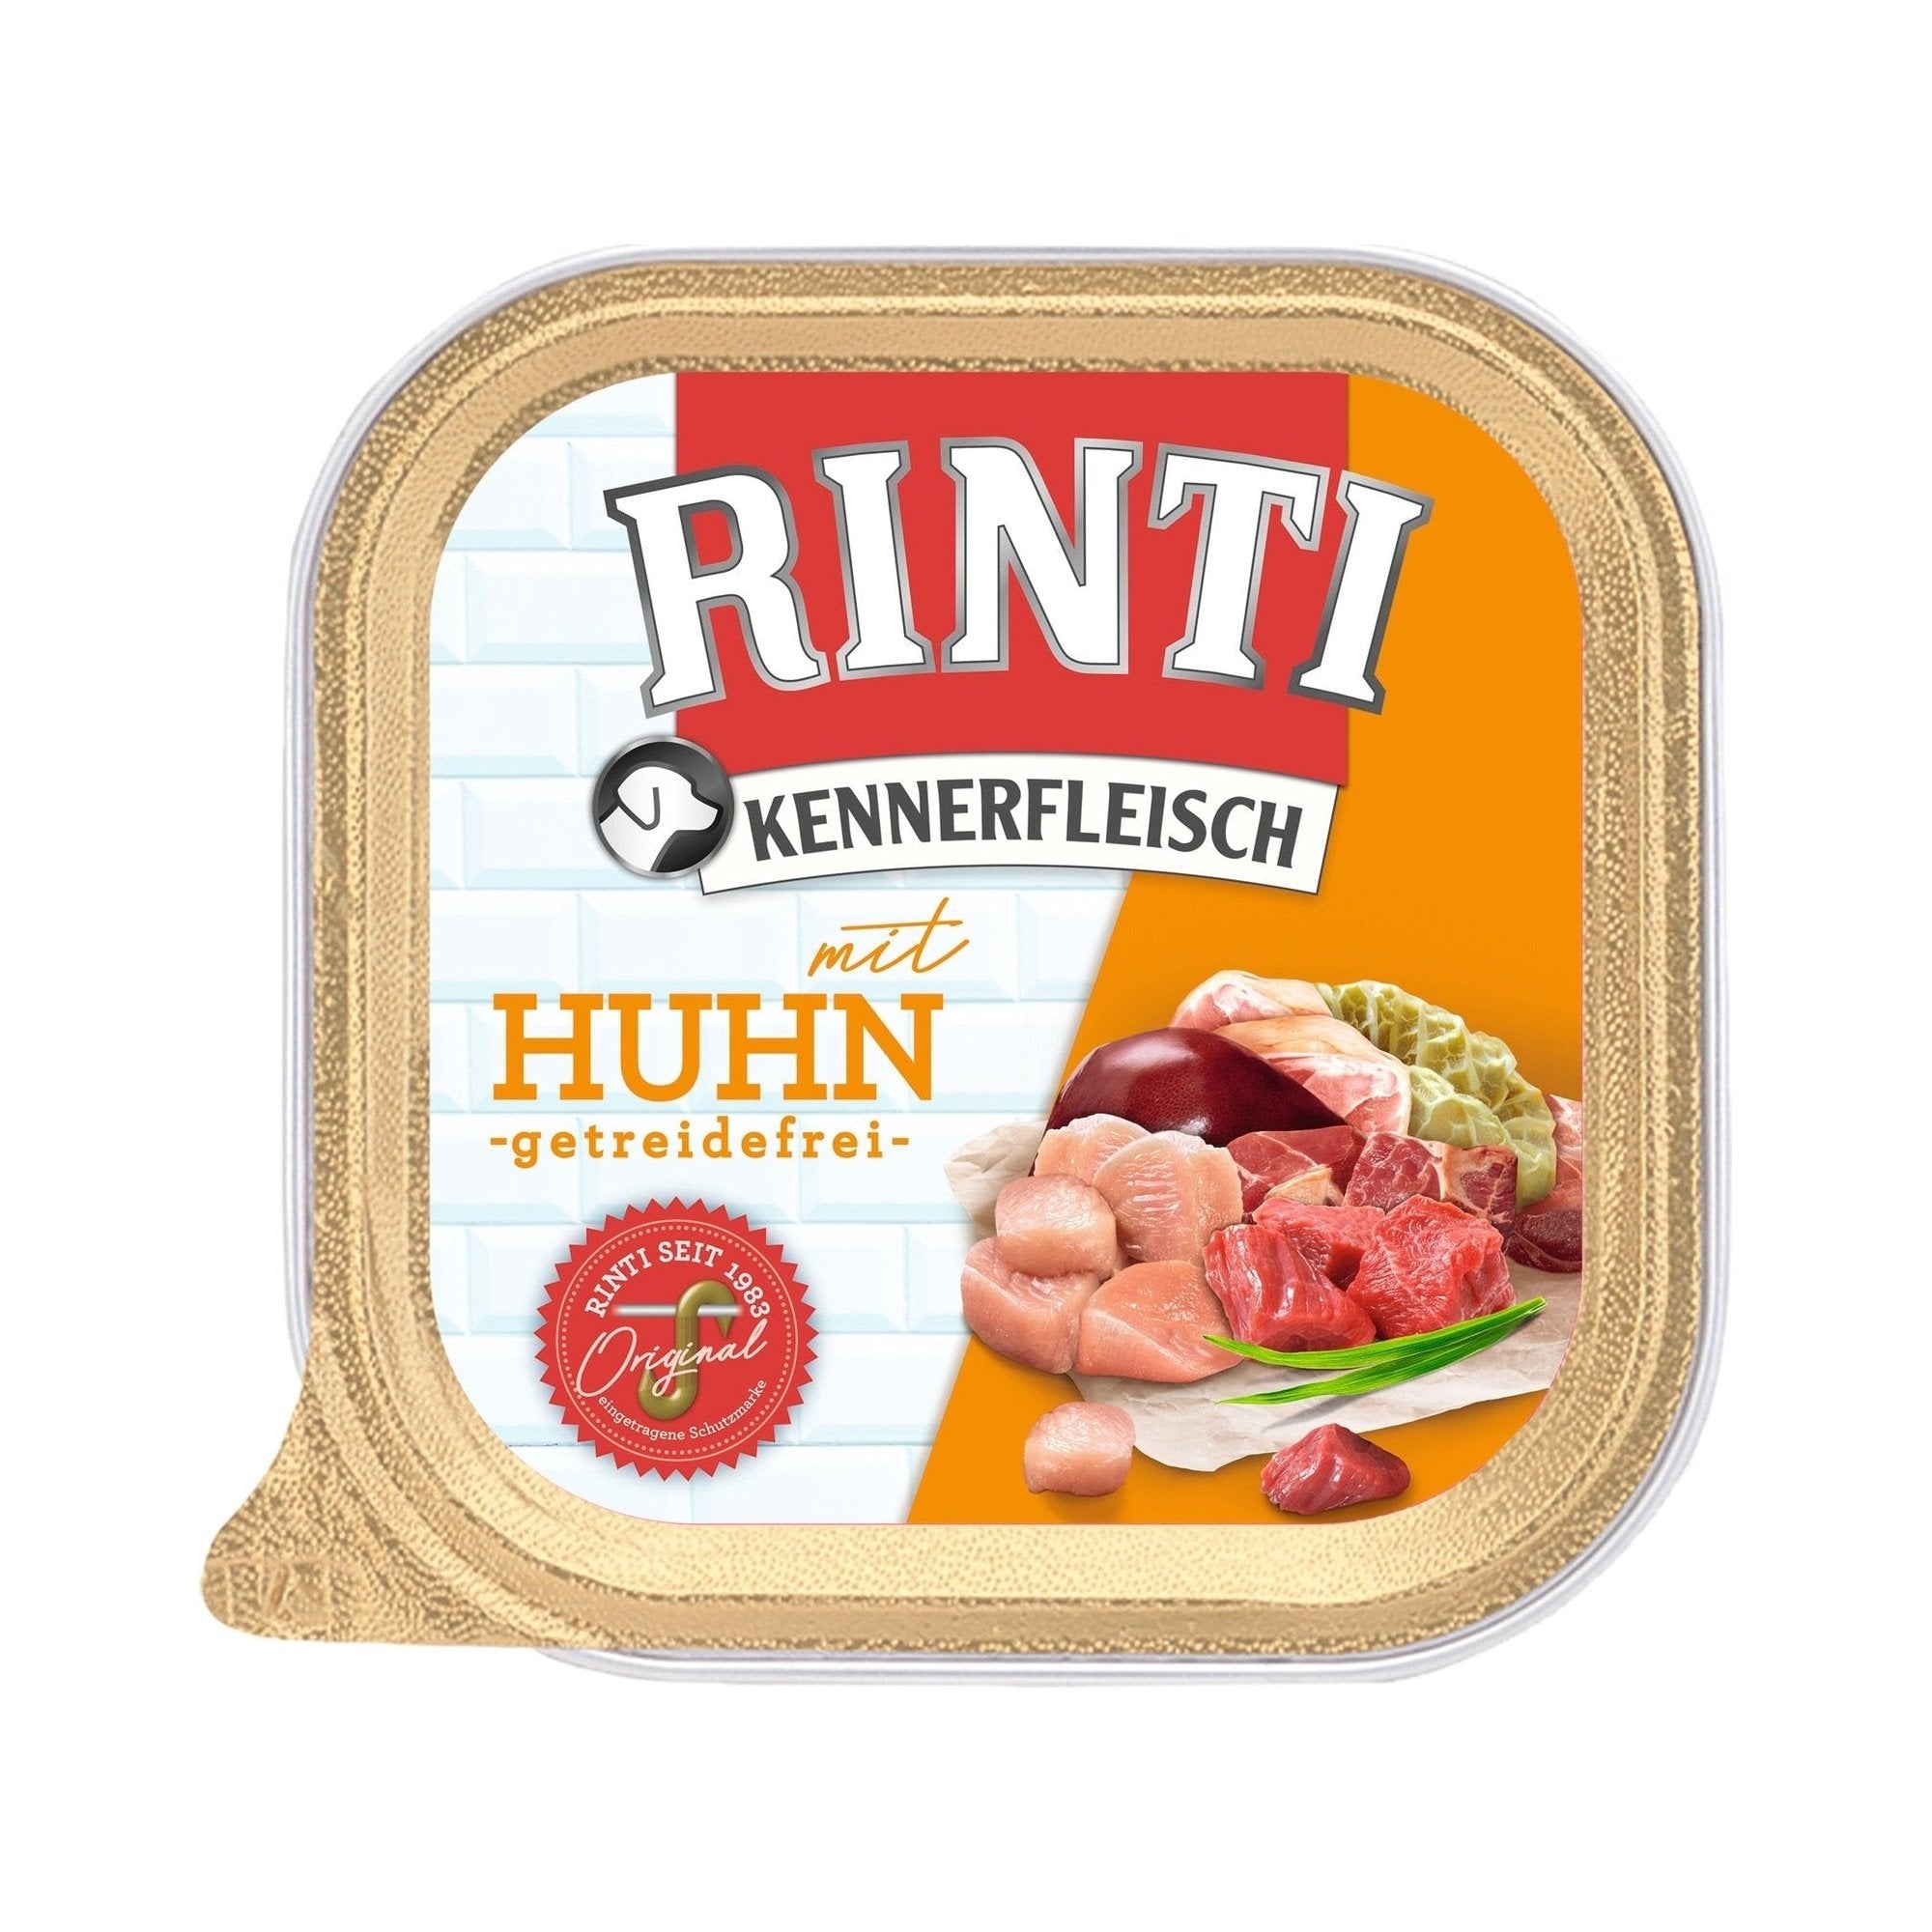 Rinti Kennerfleisch Plus Huhn - zoo.de